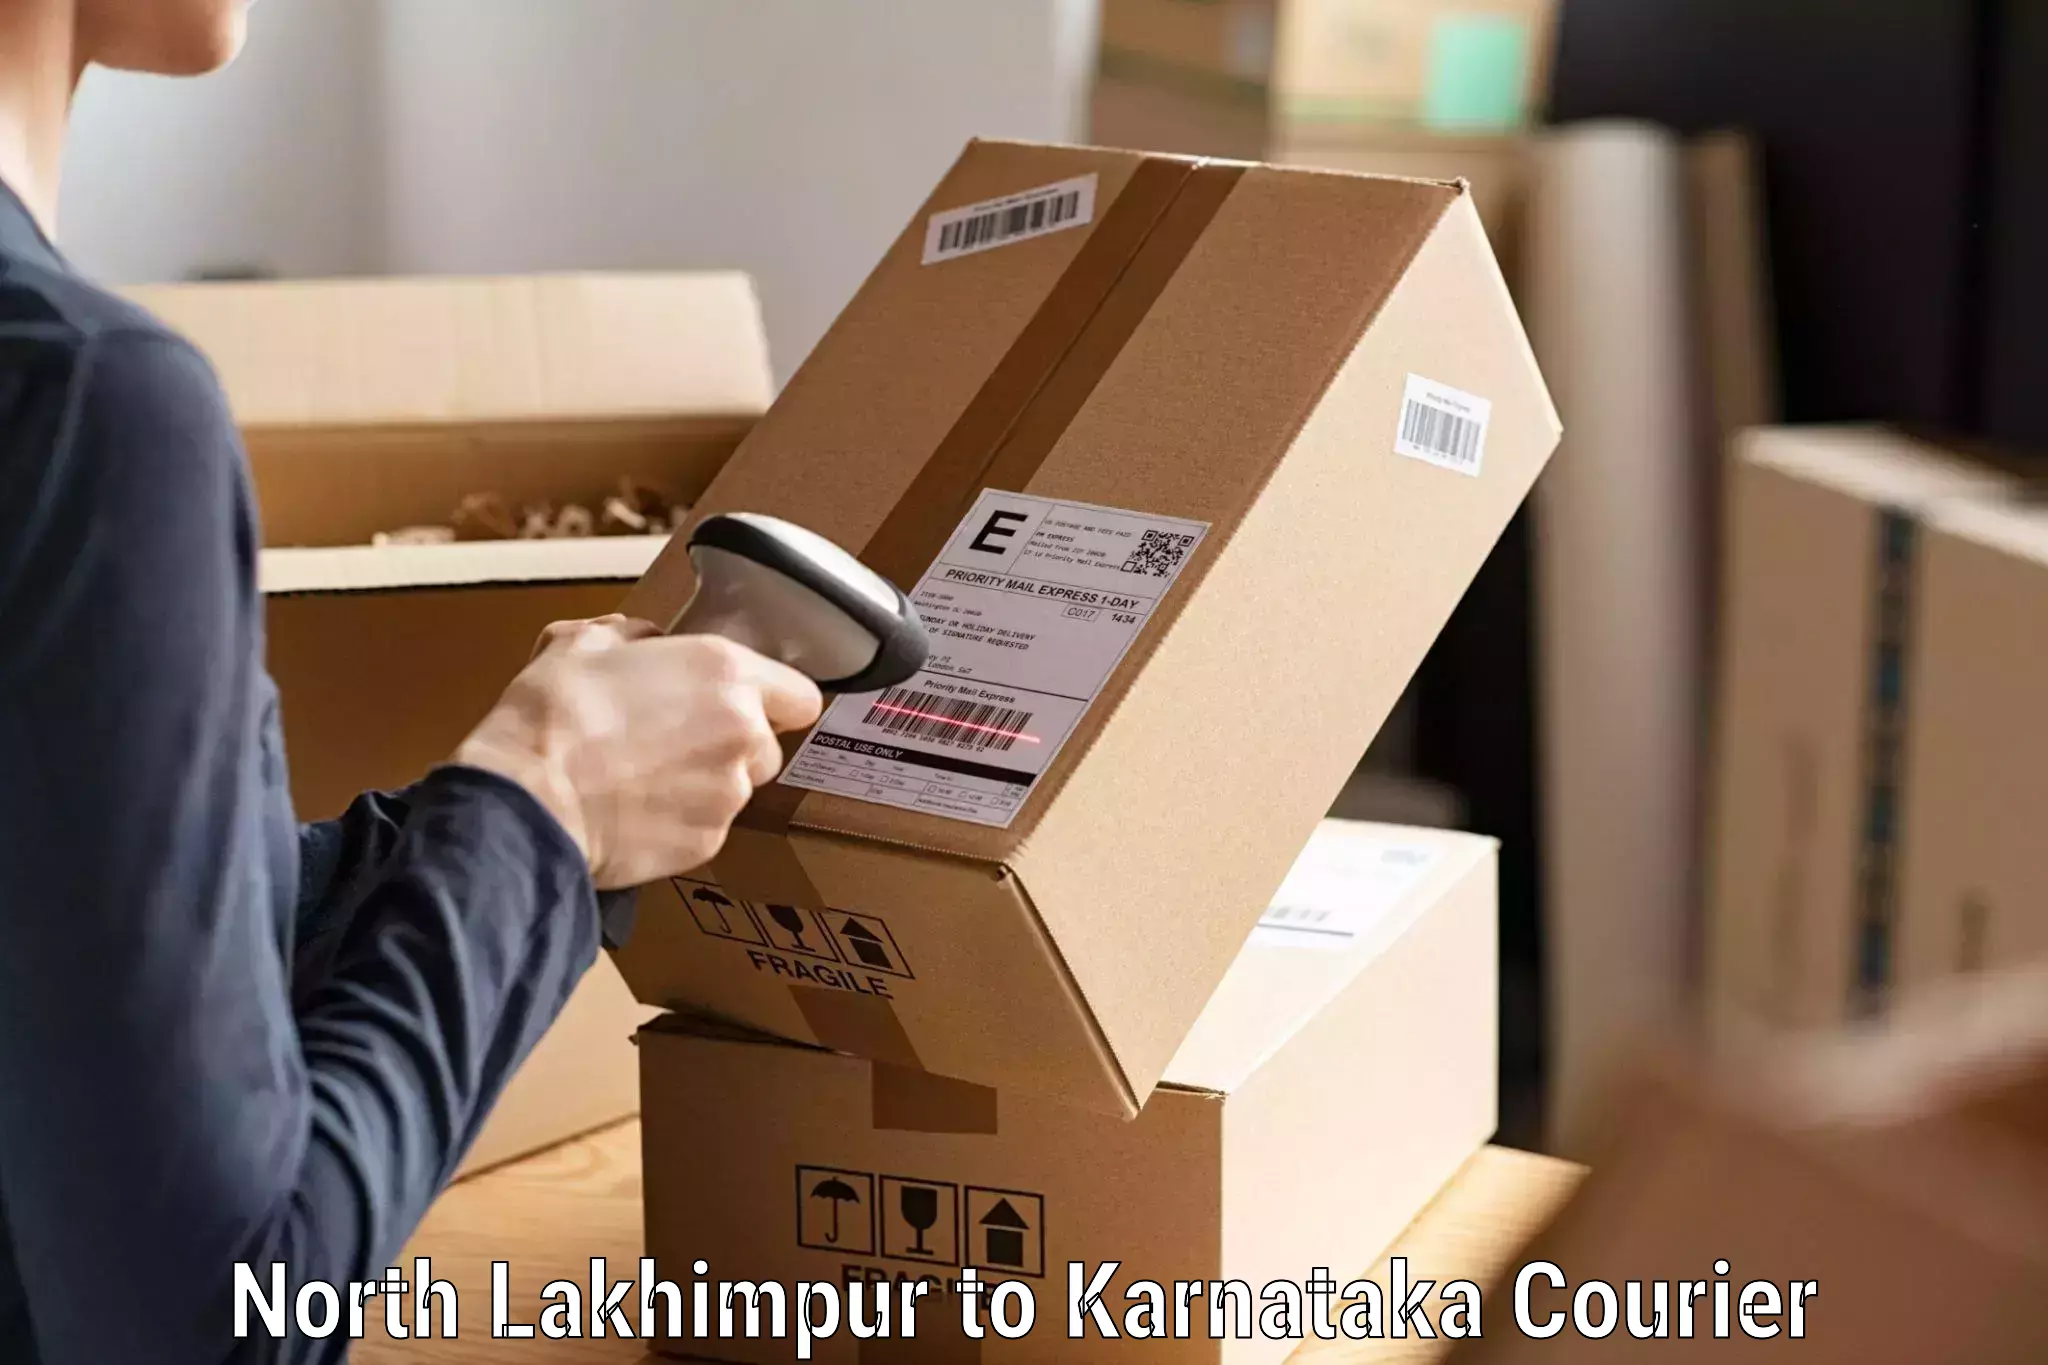 Express delivery network North Lakhimpur to Karnataka